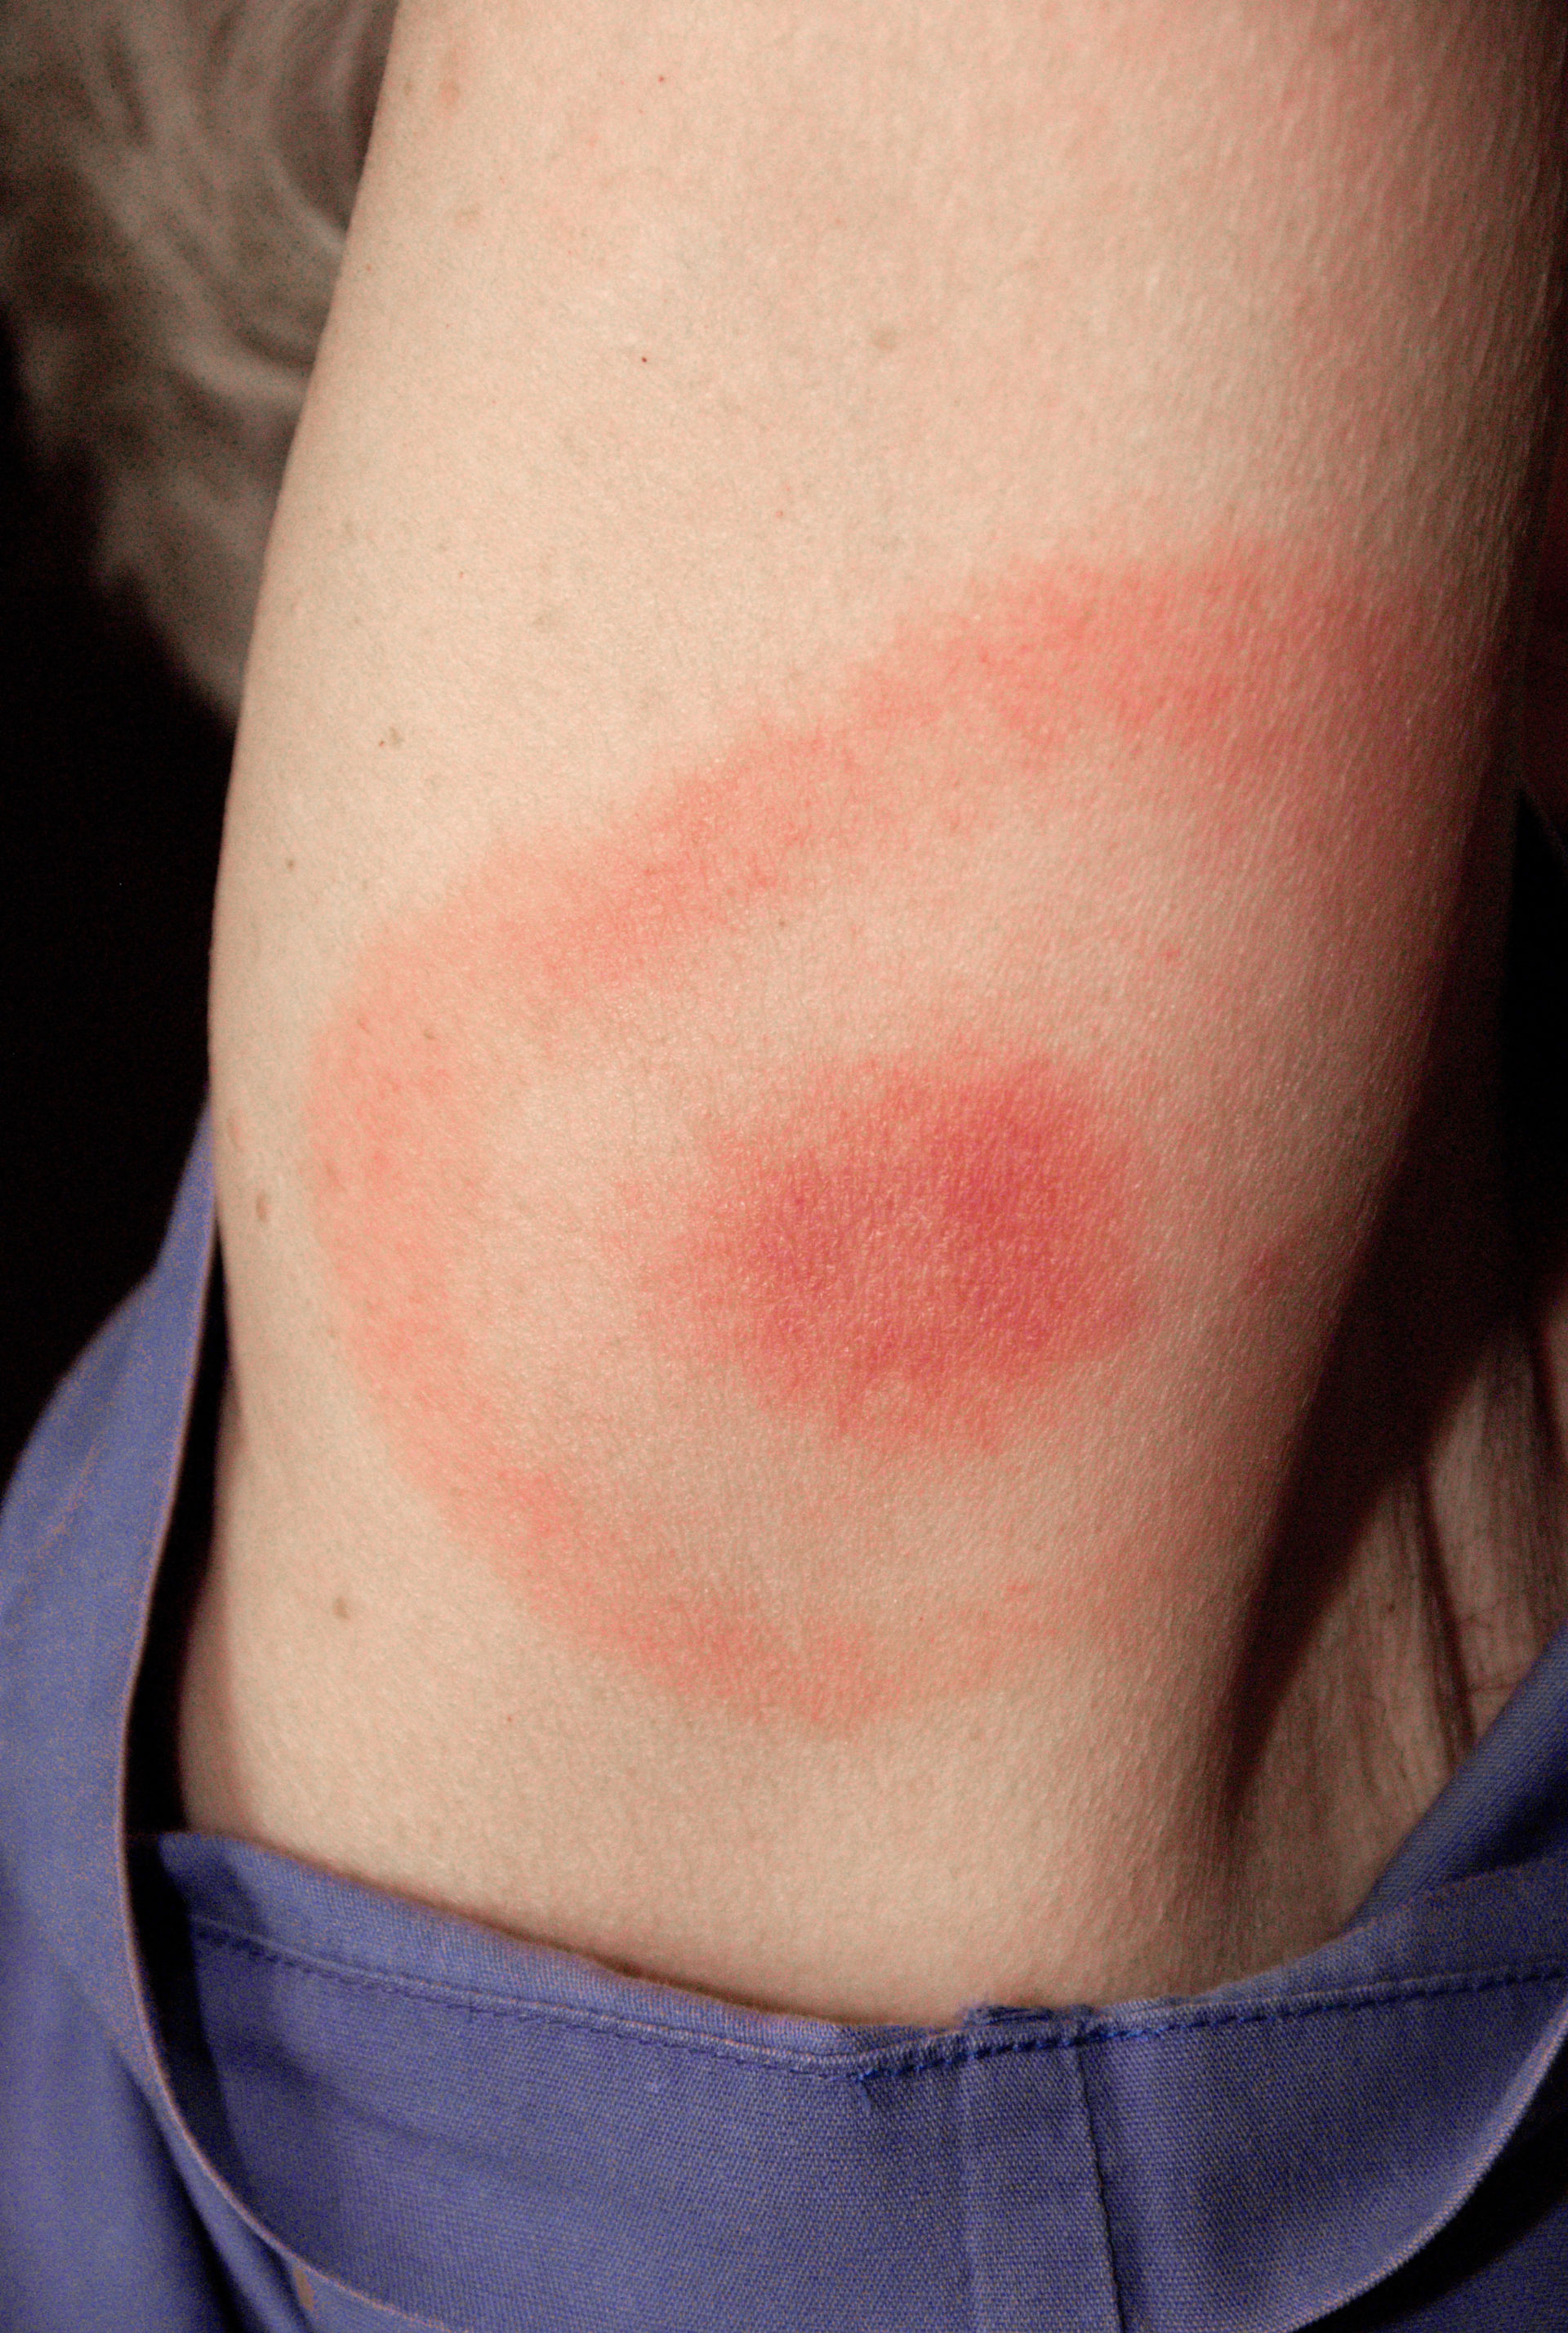 Erythema migrans - erythematous rash in Lyme disease